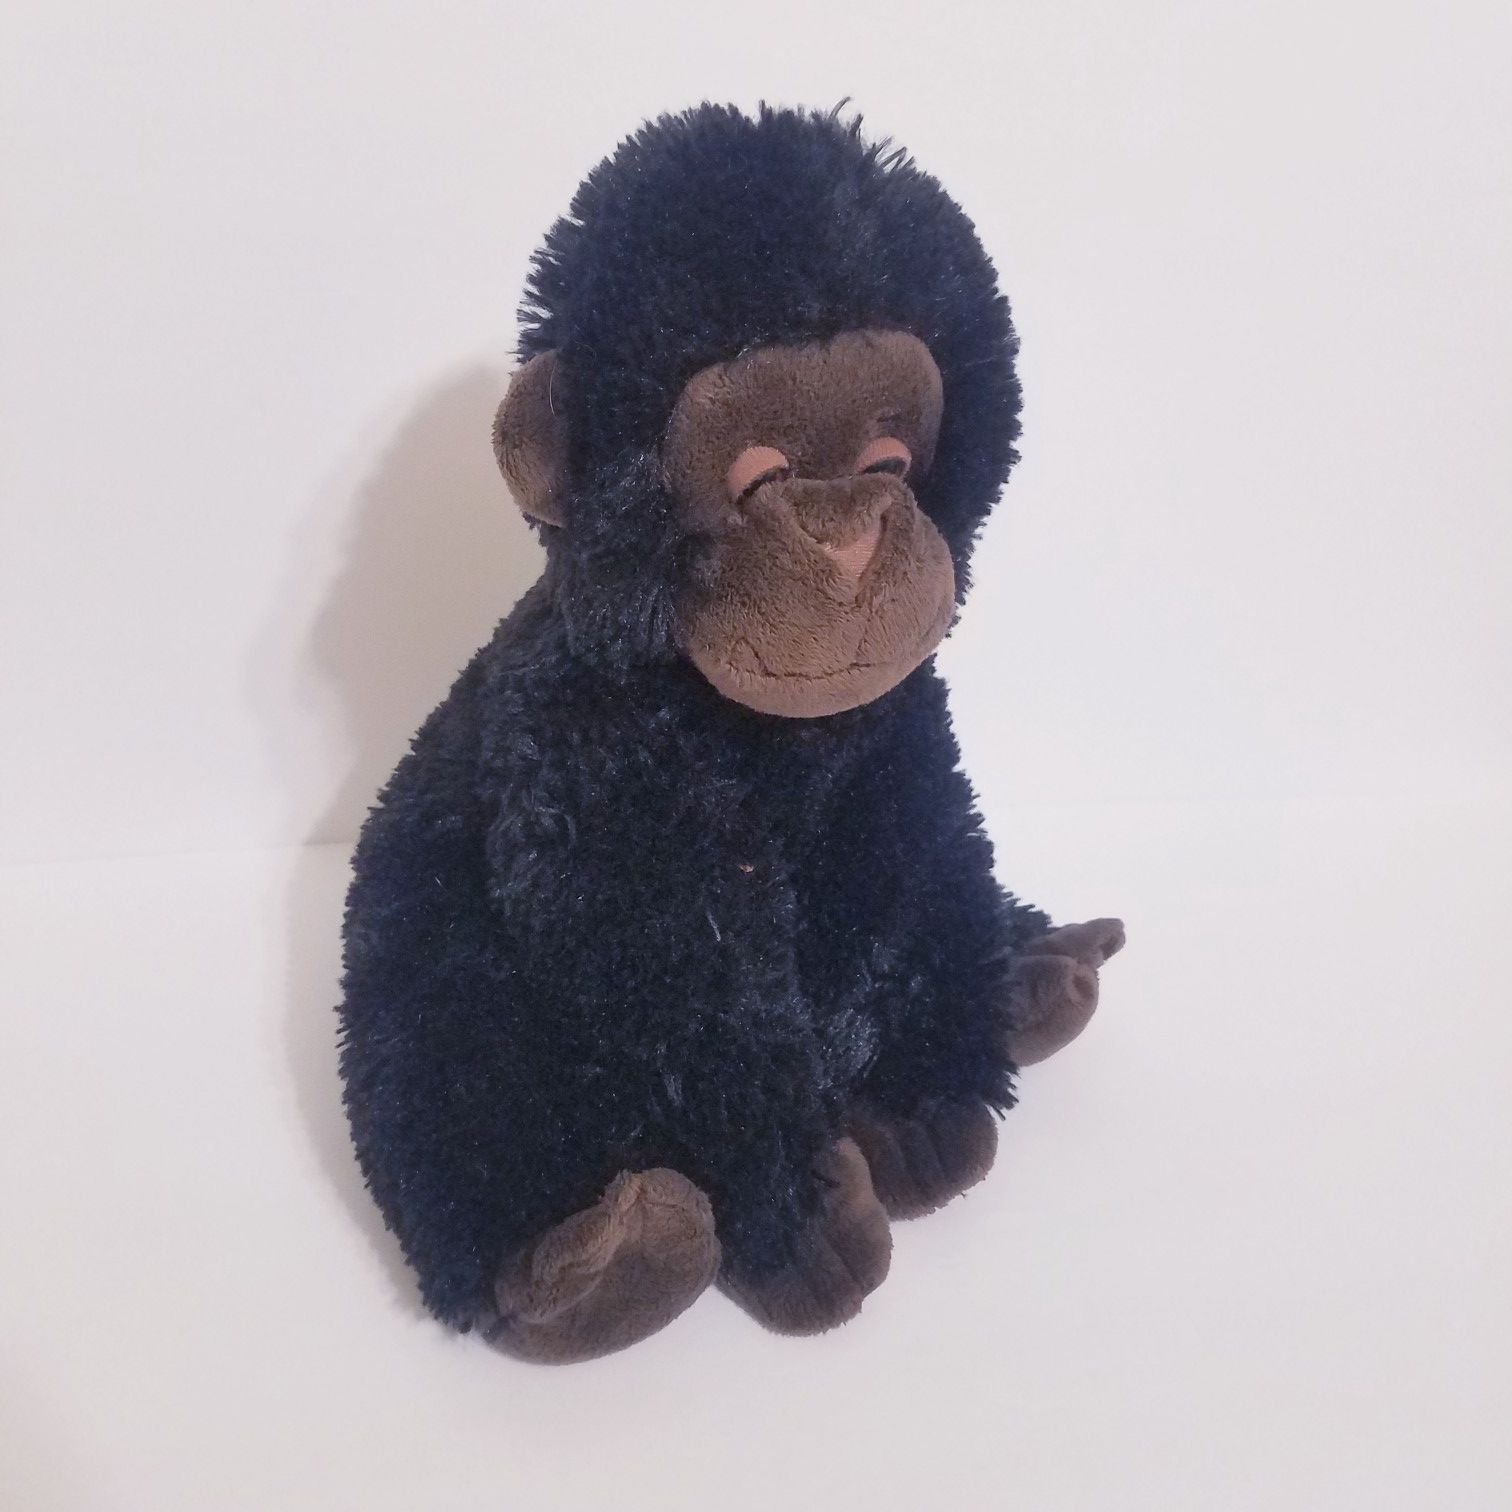 Wild Republic Plush 12" Baby Gorilla Plush Monkey Stuffed Animal